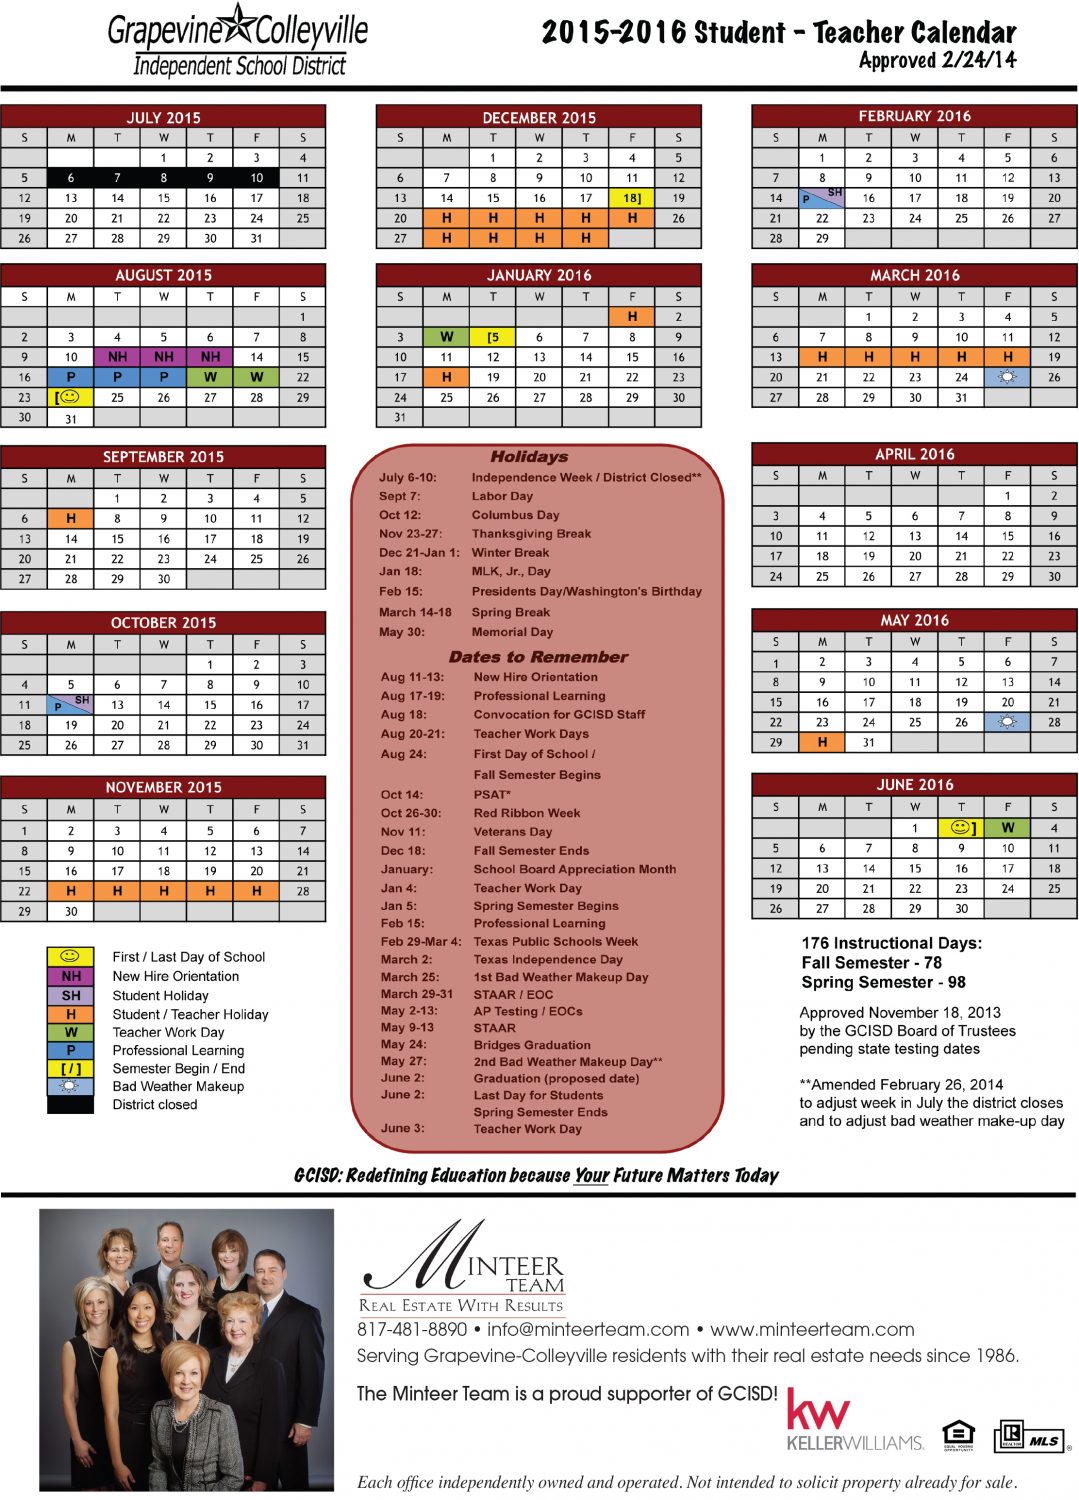 School Calendar for GCISD (20152016) Minteer Real Estate Team